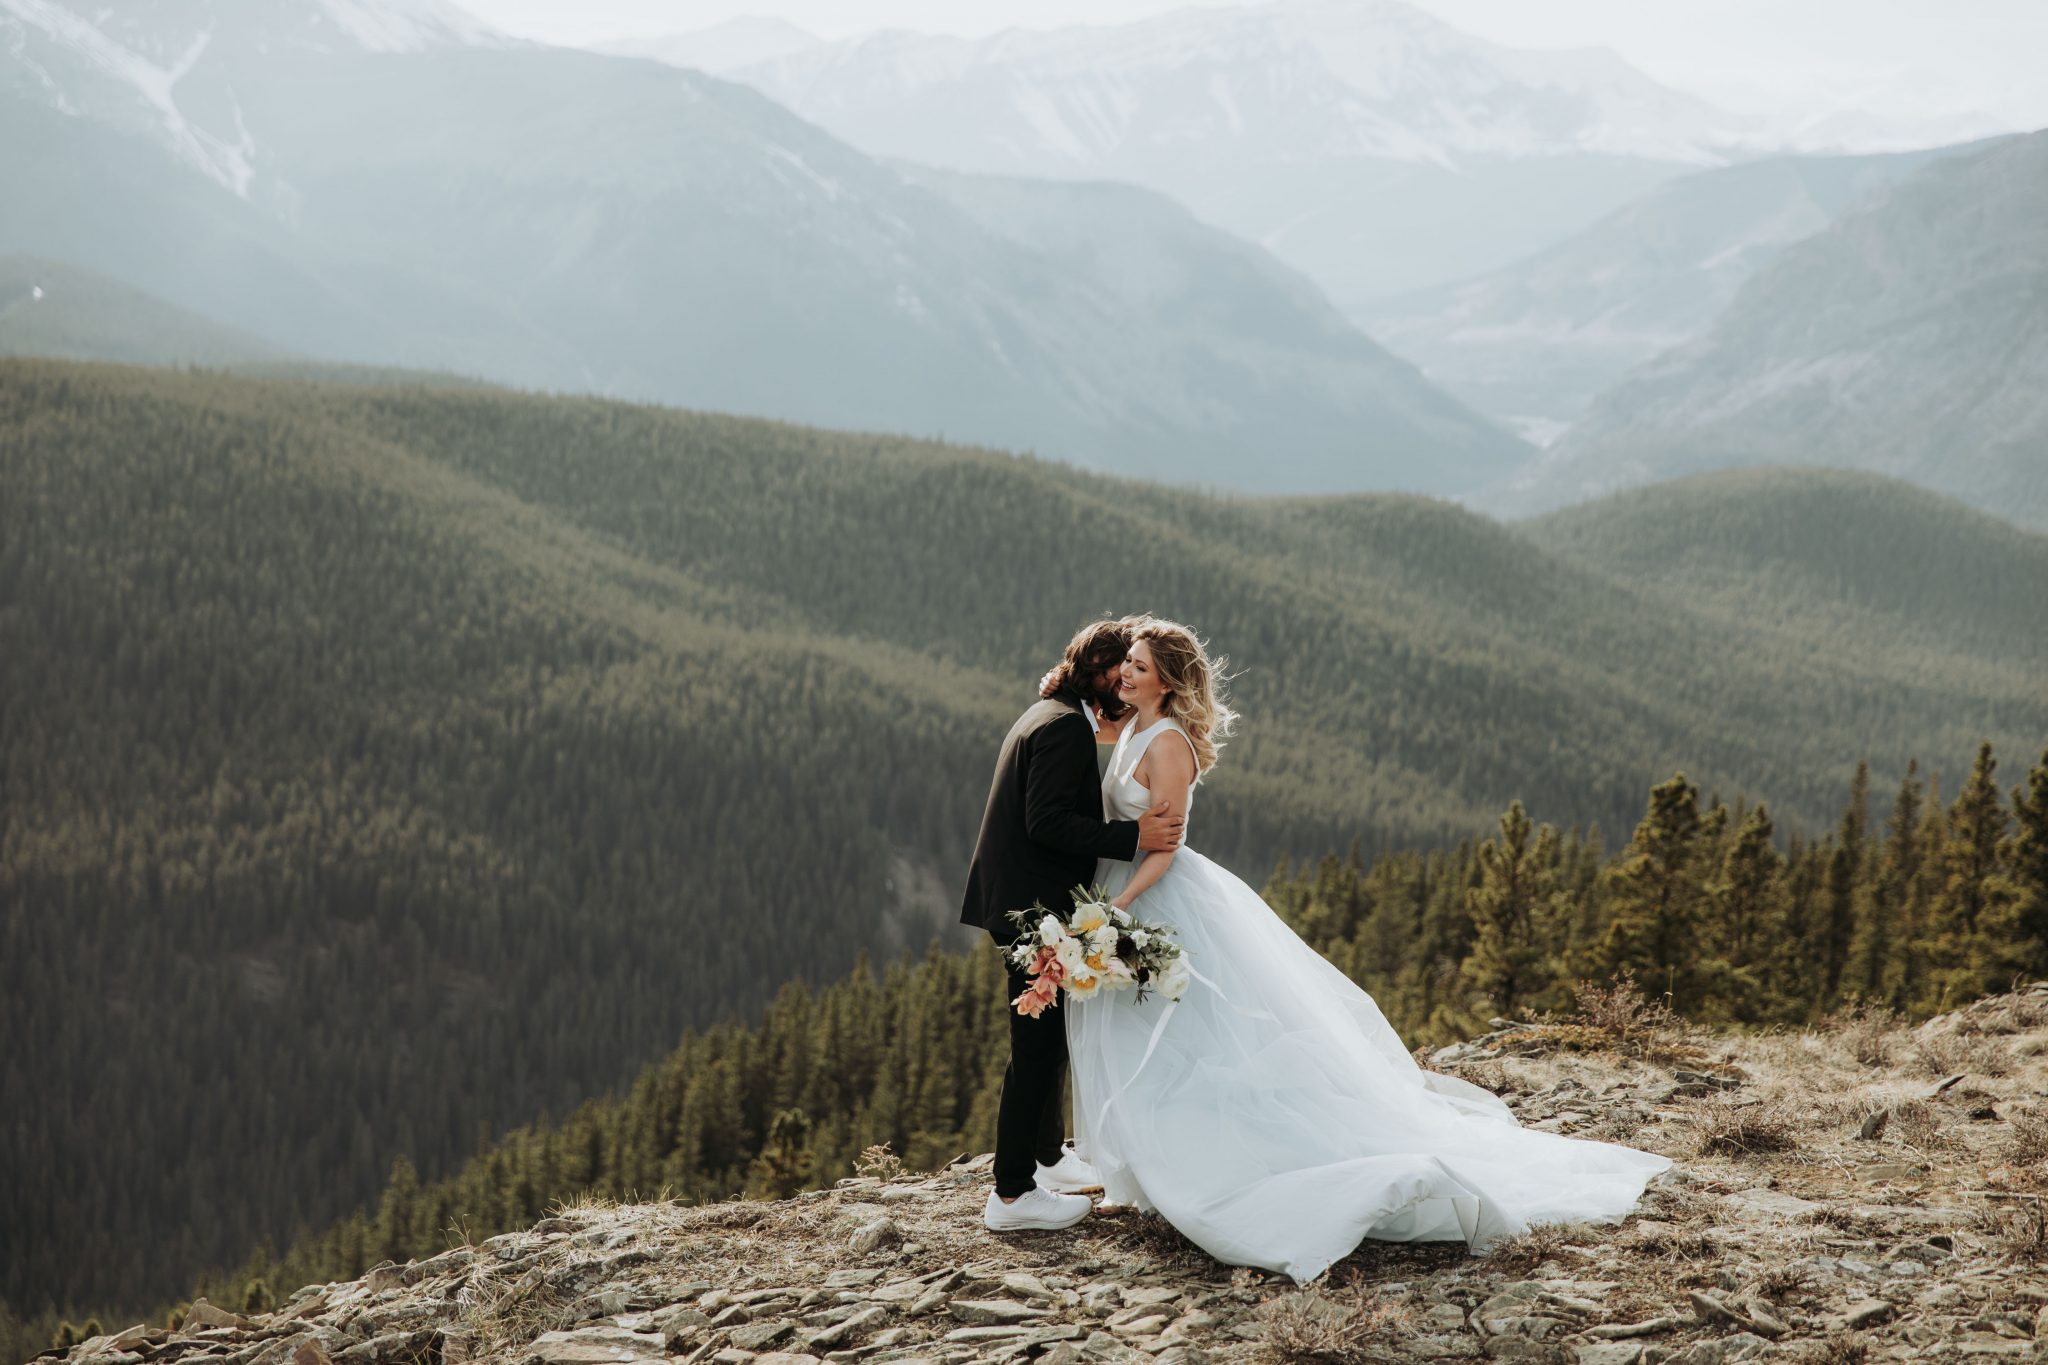 Mountainous Adventure Session featuring Contemporary Attire & Alberta Views Featured on Bronte Bridë Mountain Wedding